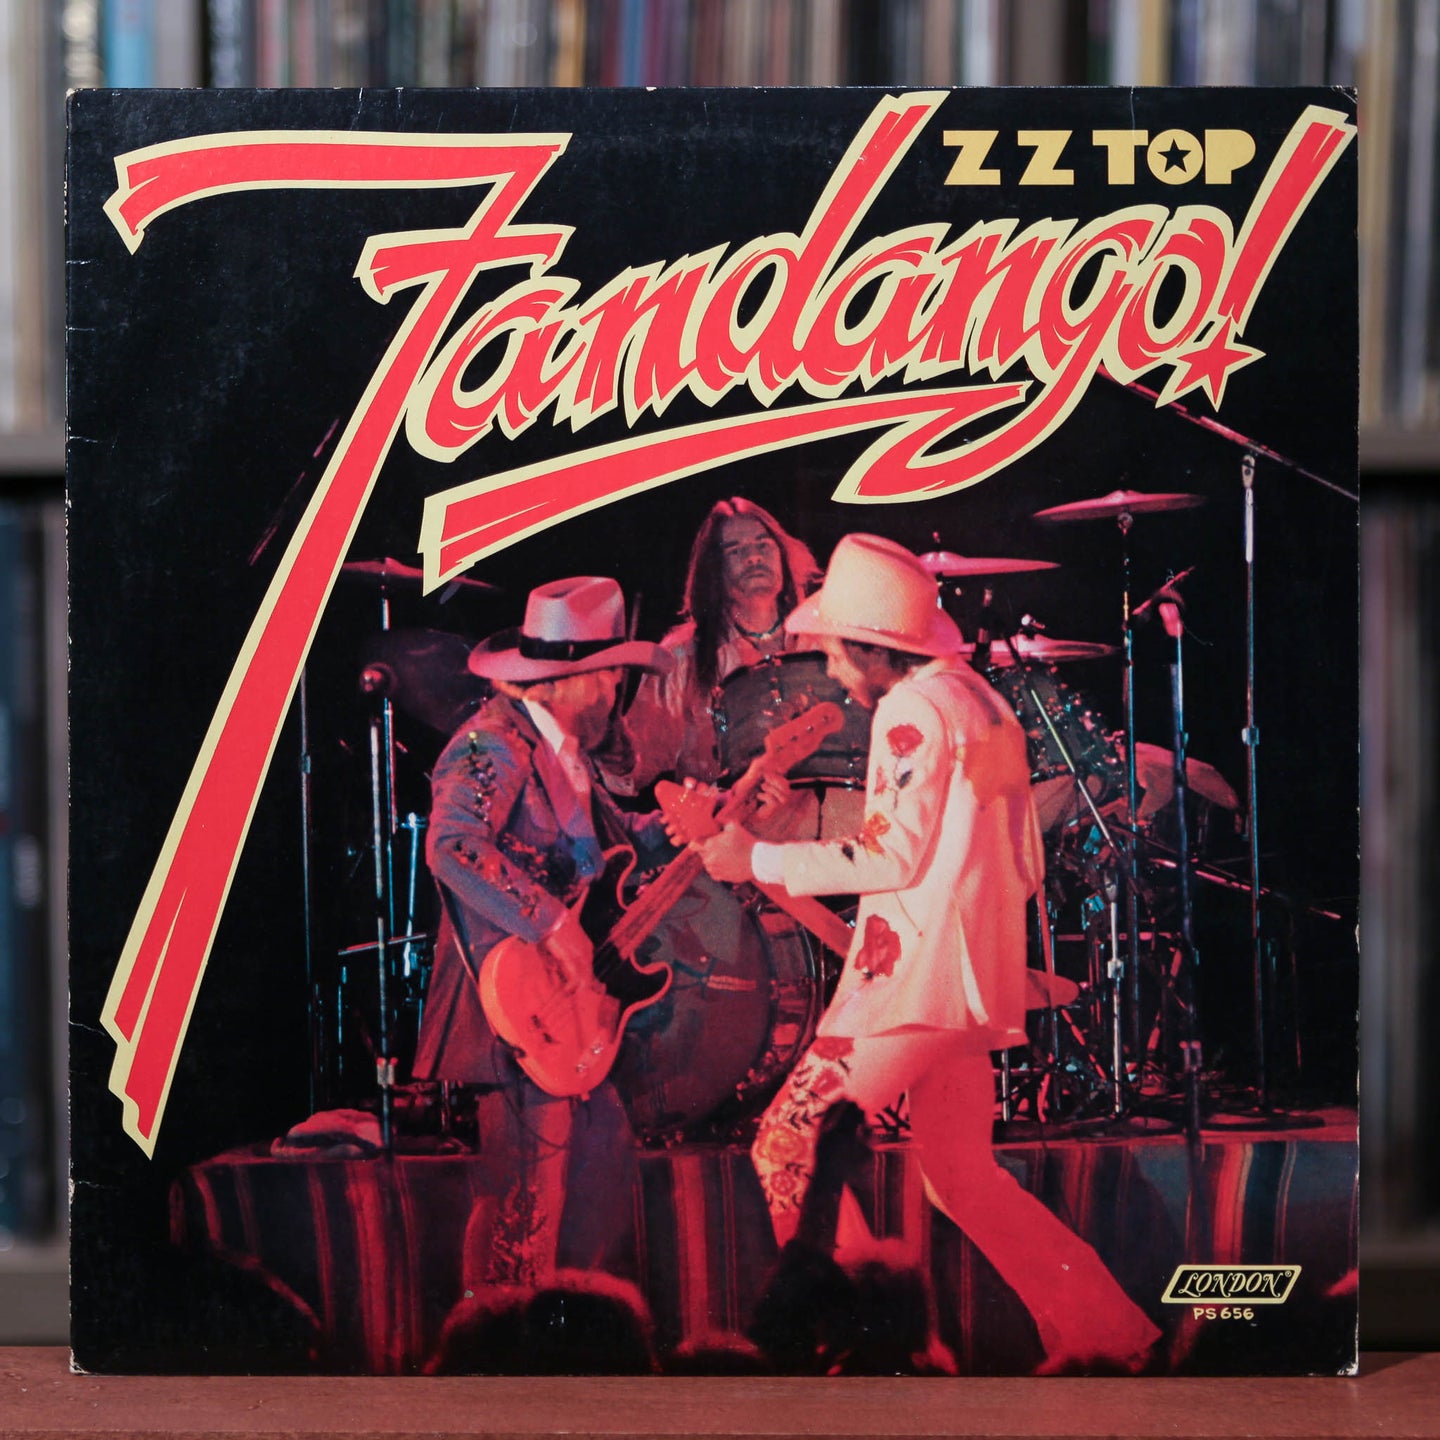 ZZ Top - Fandango! - 1975 London, VG+/VG+